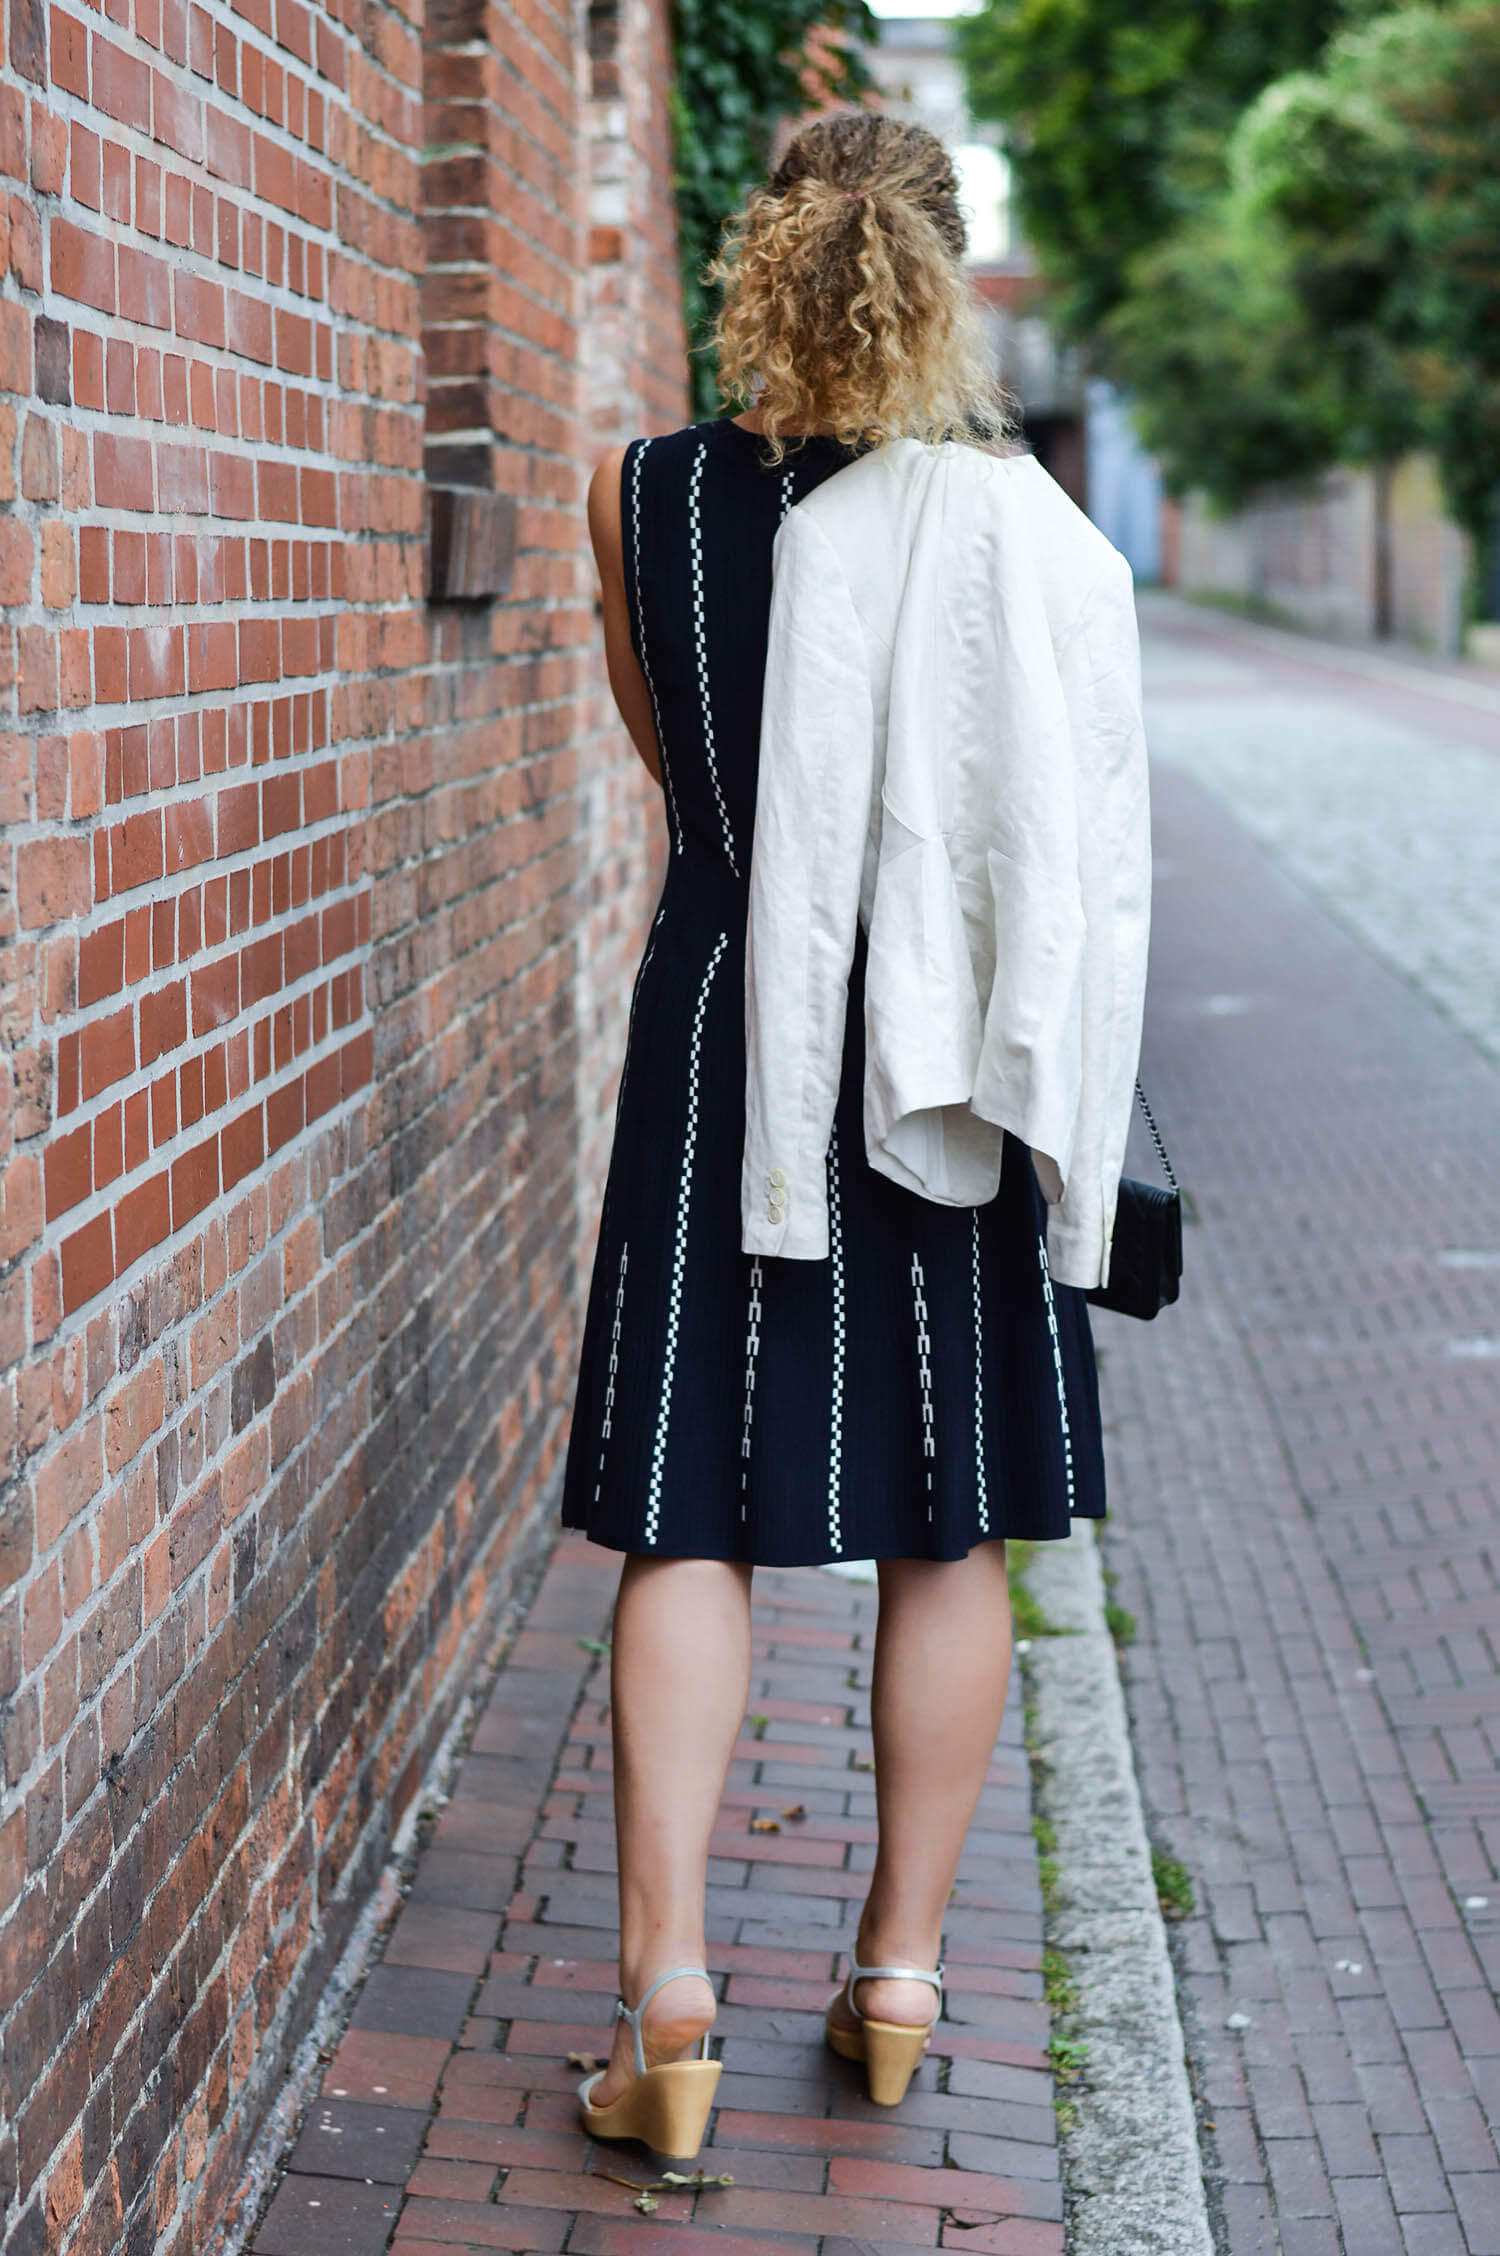 kationette-fashionblog-nrw-Outfit-Feminine-Knit-Dress-Blazer-Chanel-Wedges-ootd